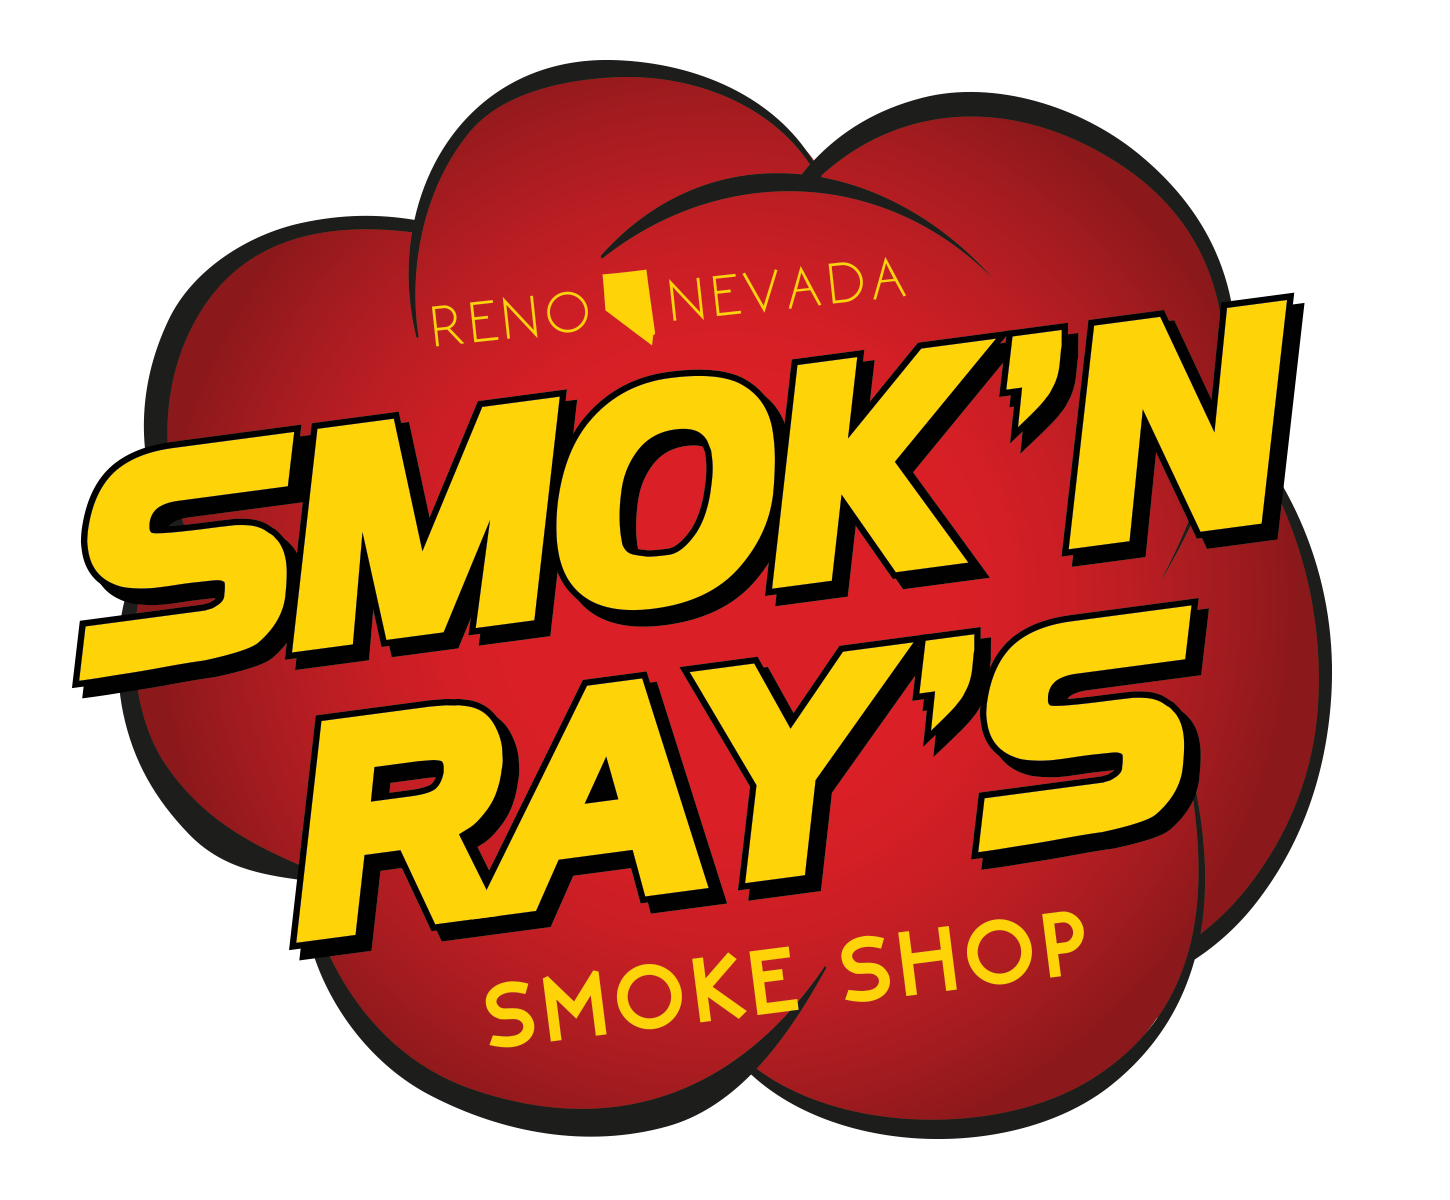 Smok'n Ray's Logo